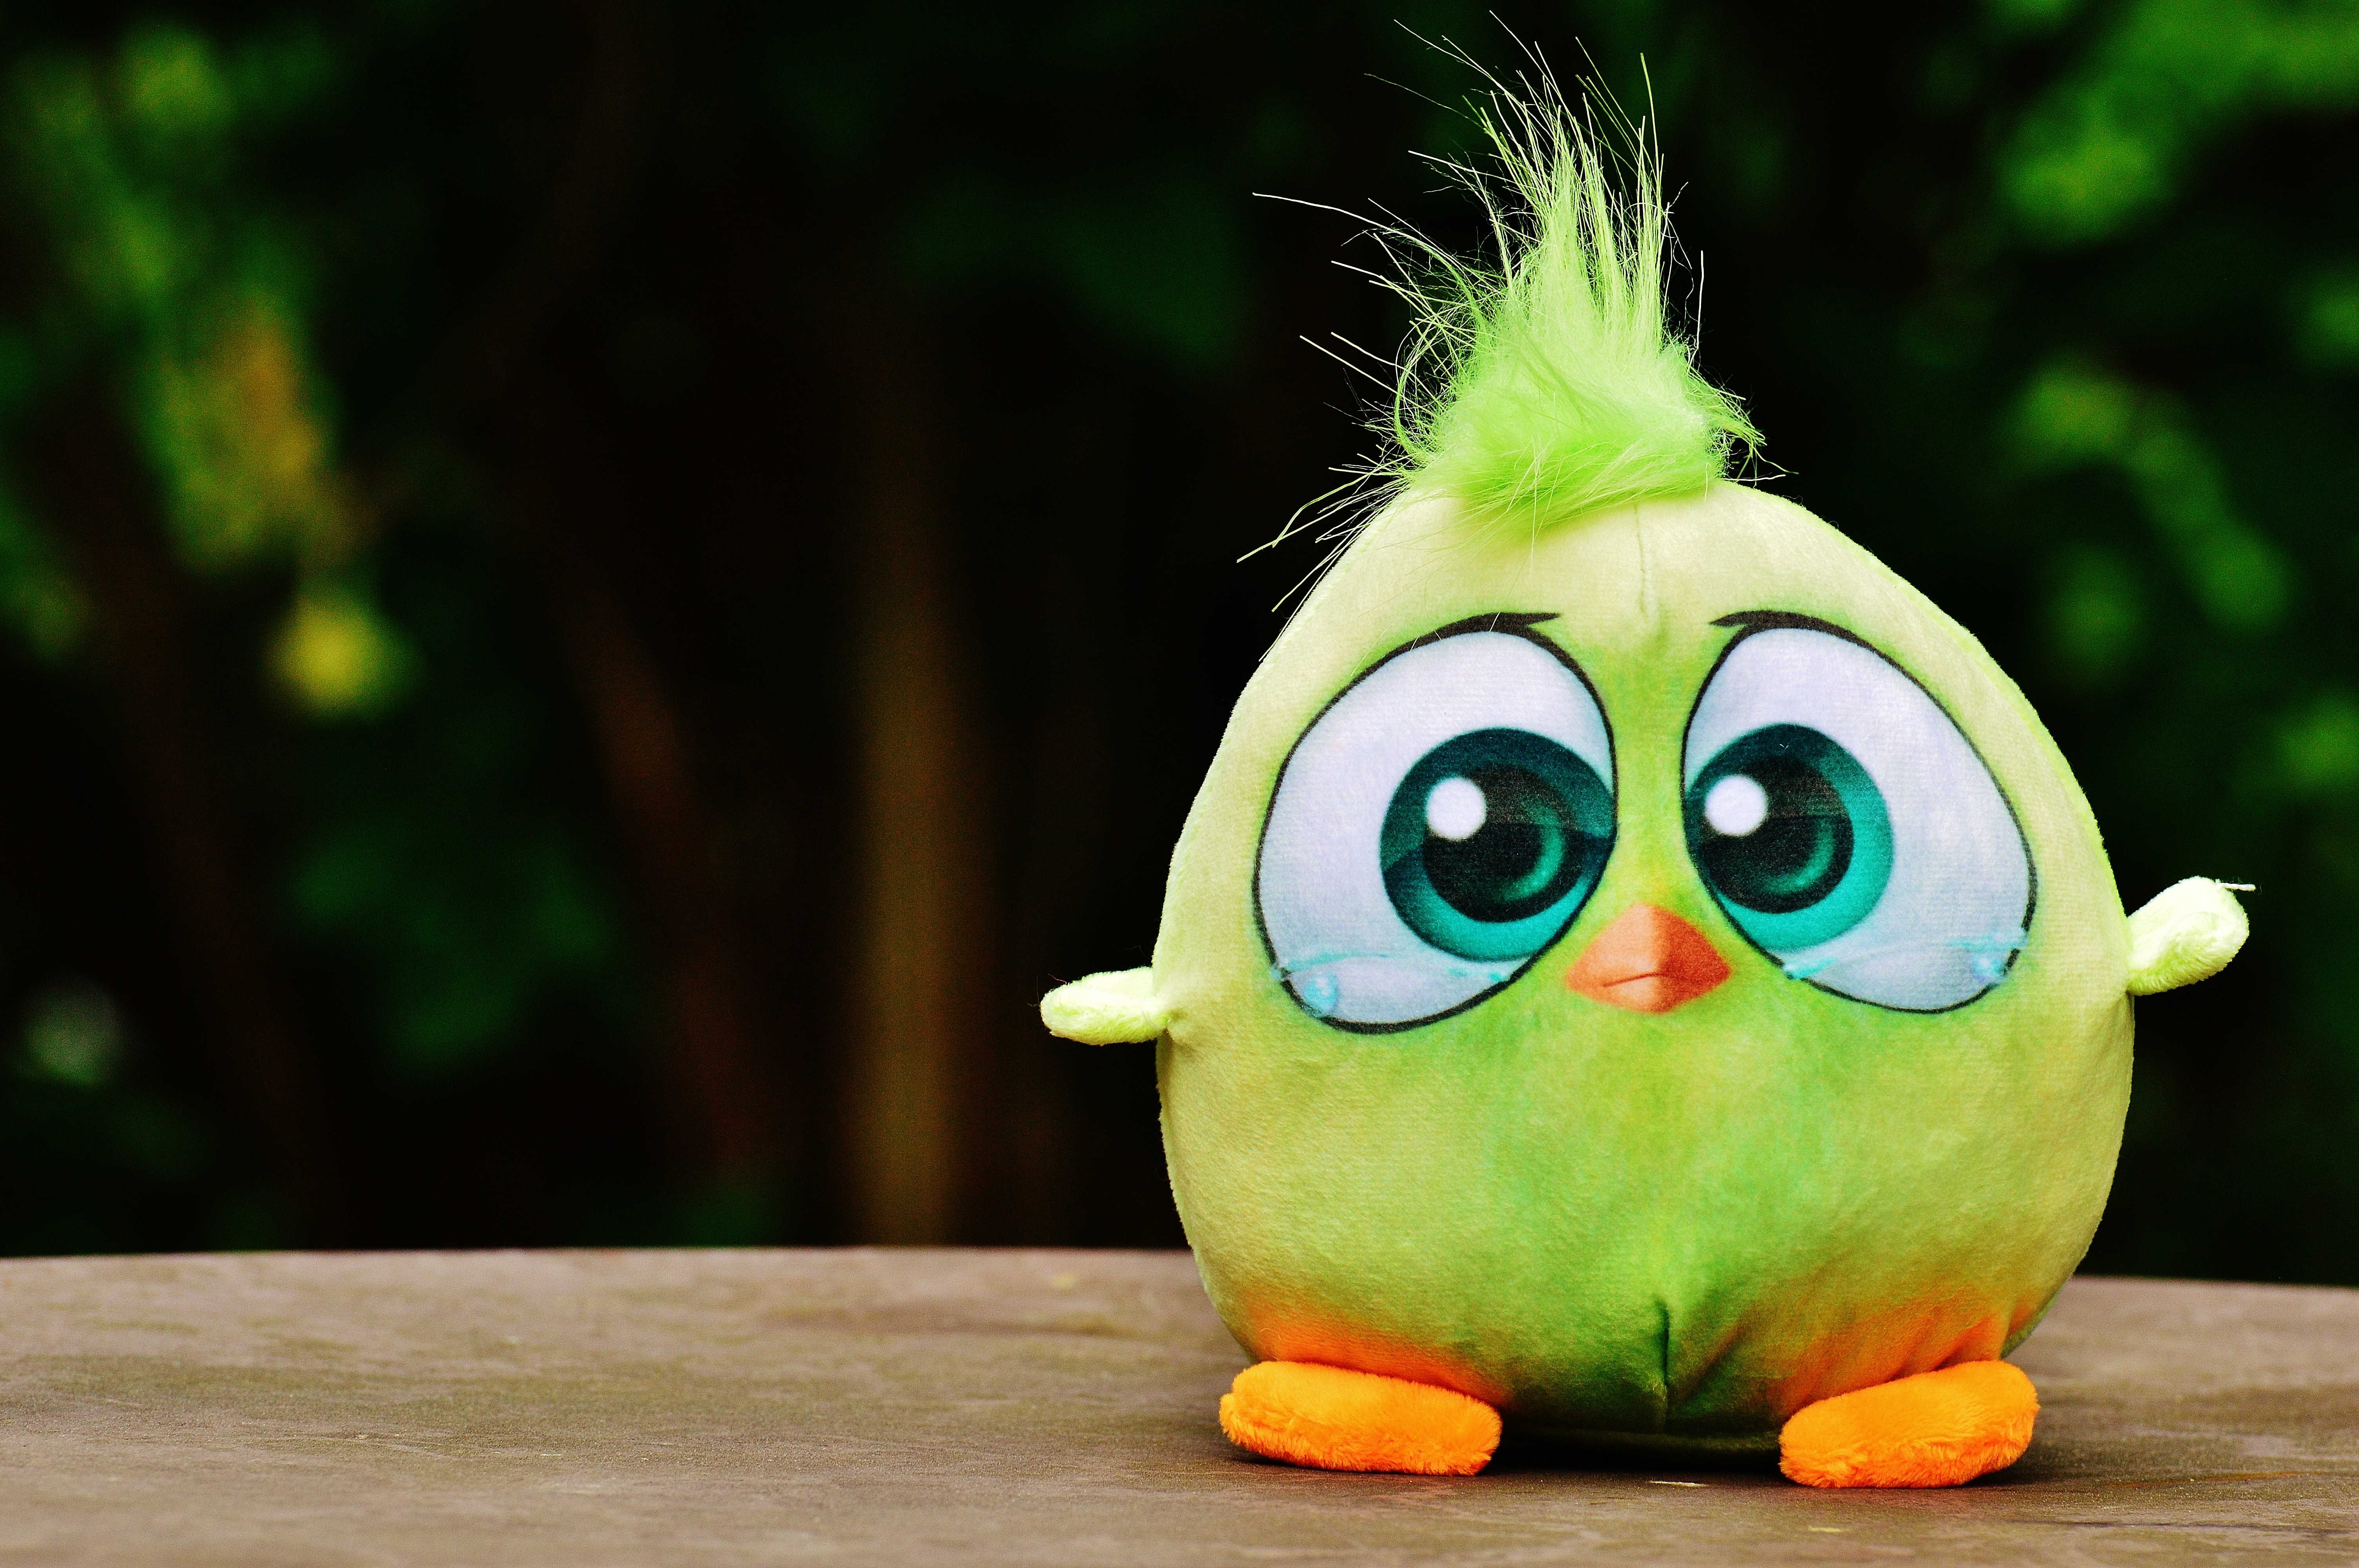 green chick plush toy